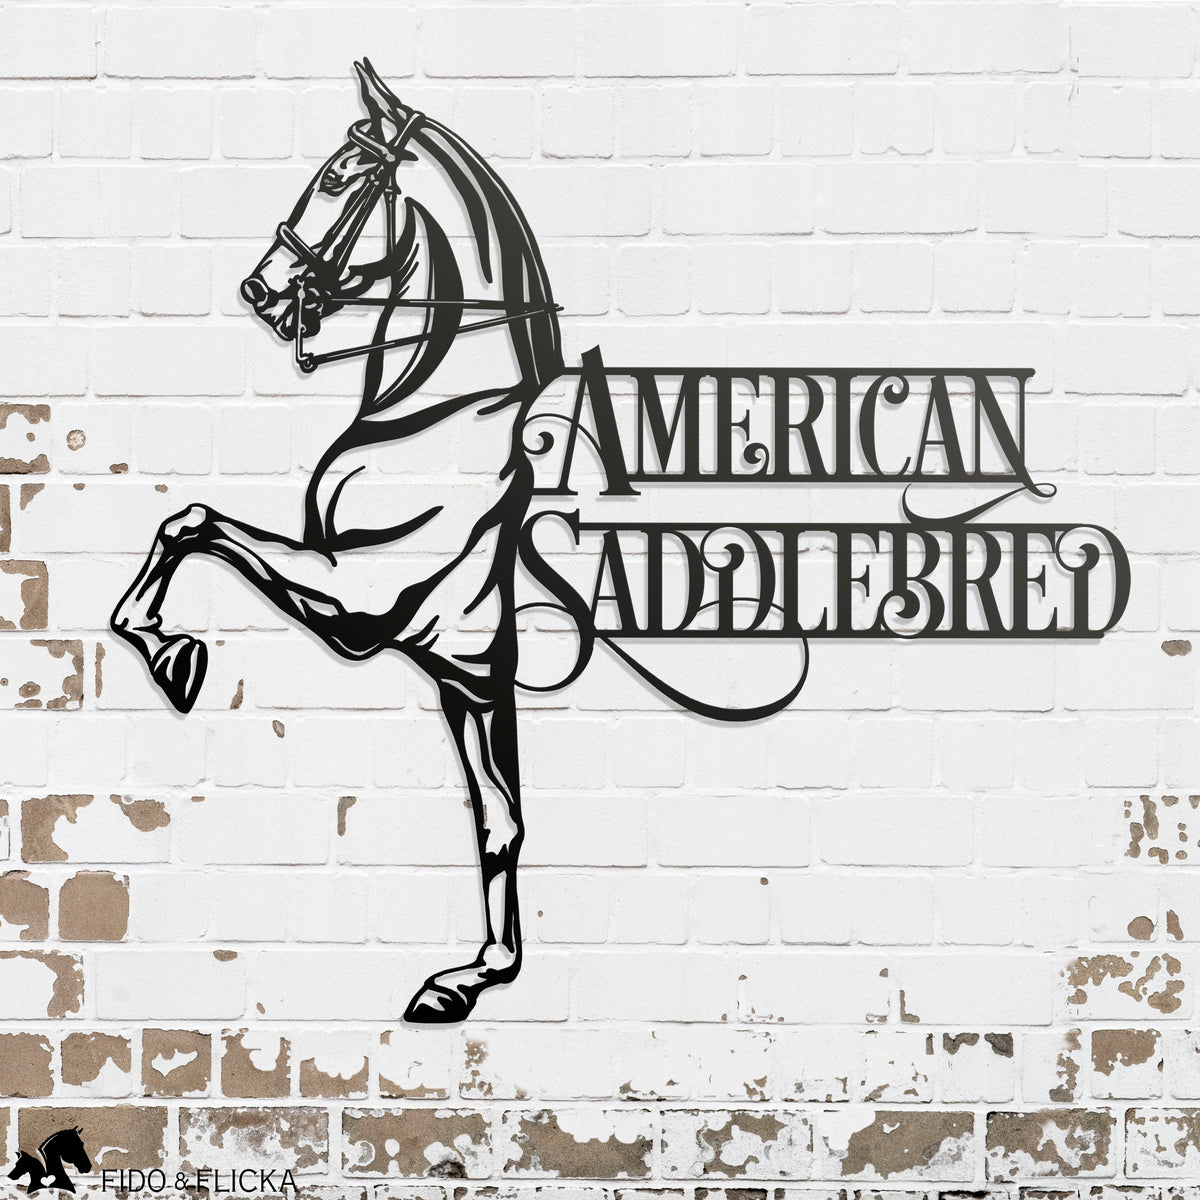 american saddlebred horse metal wall art sign